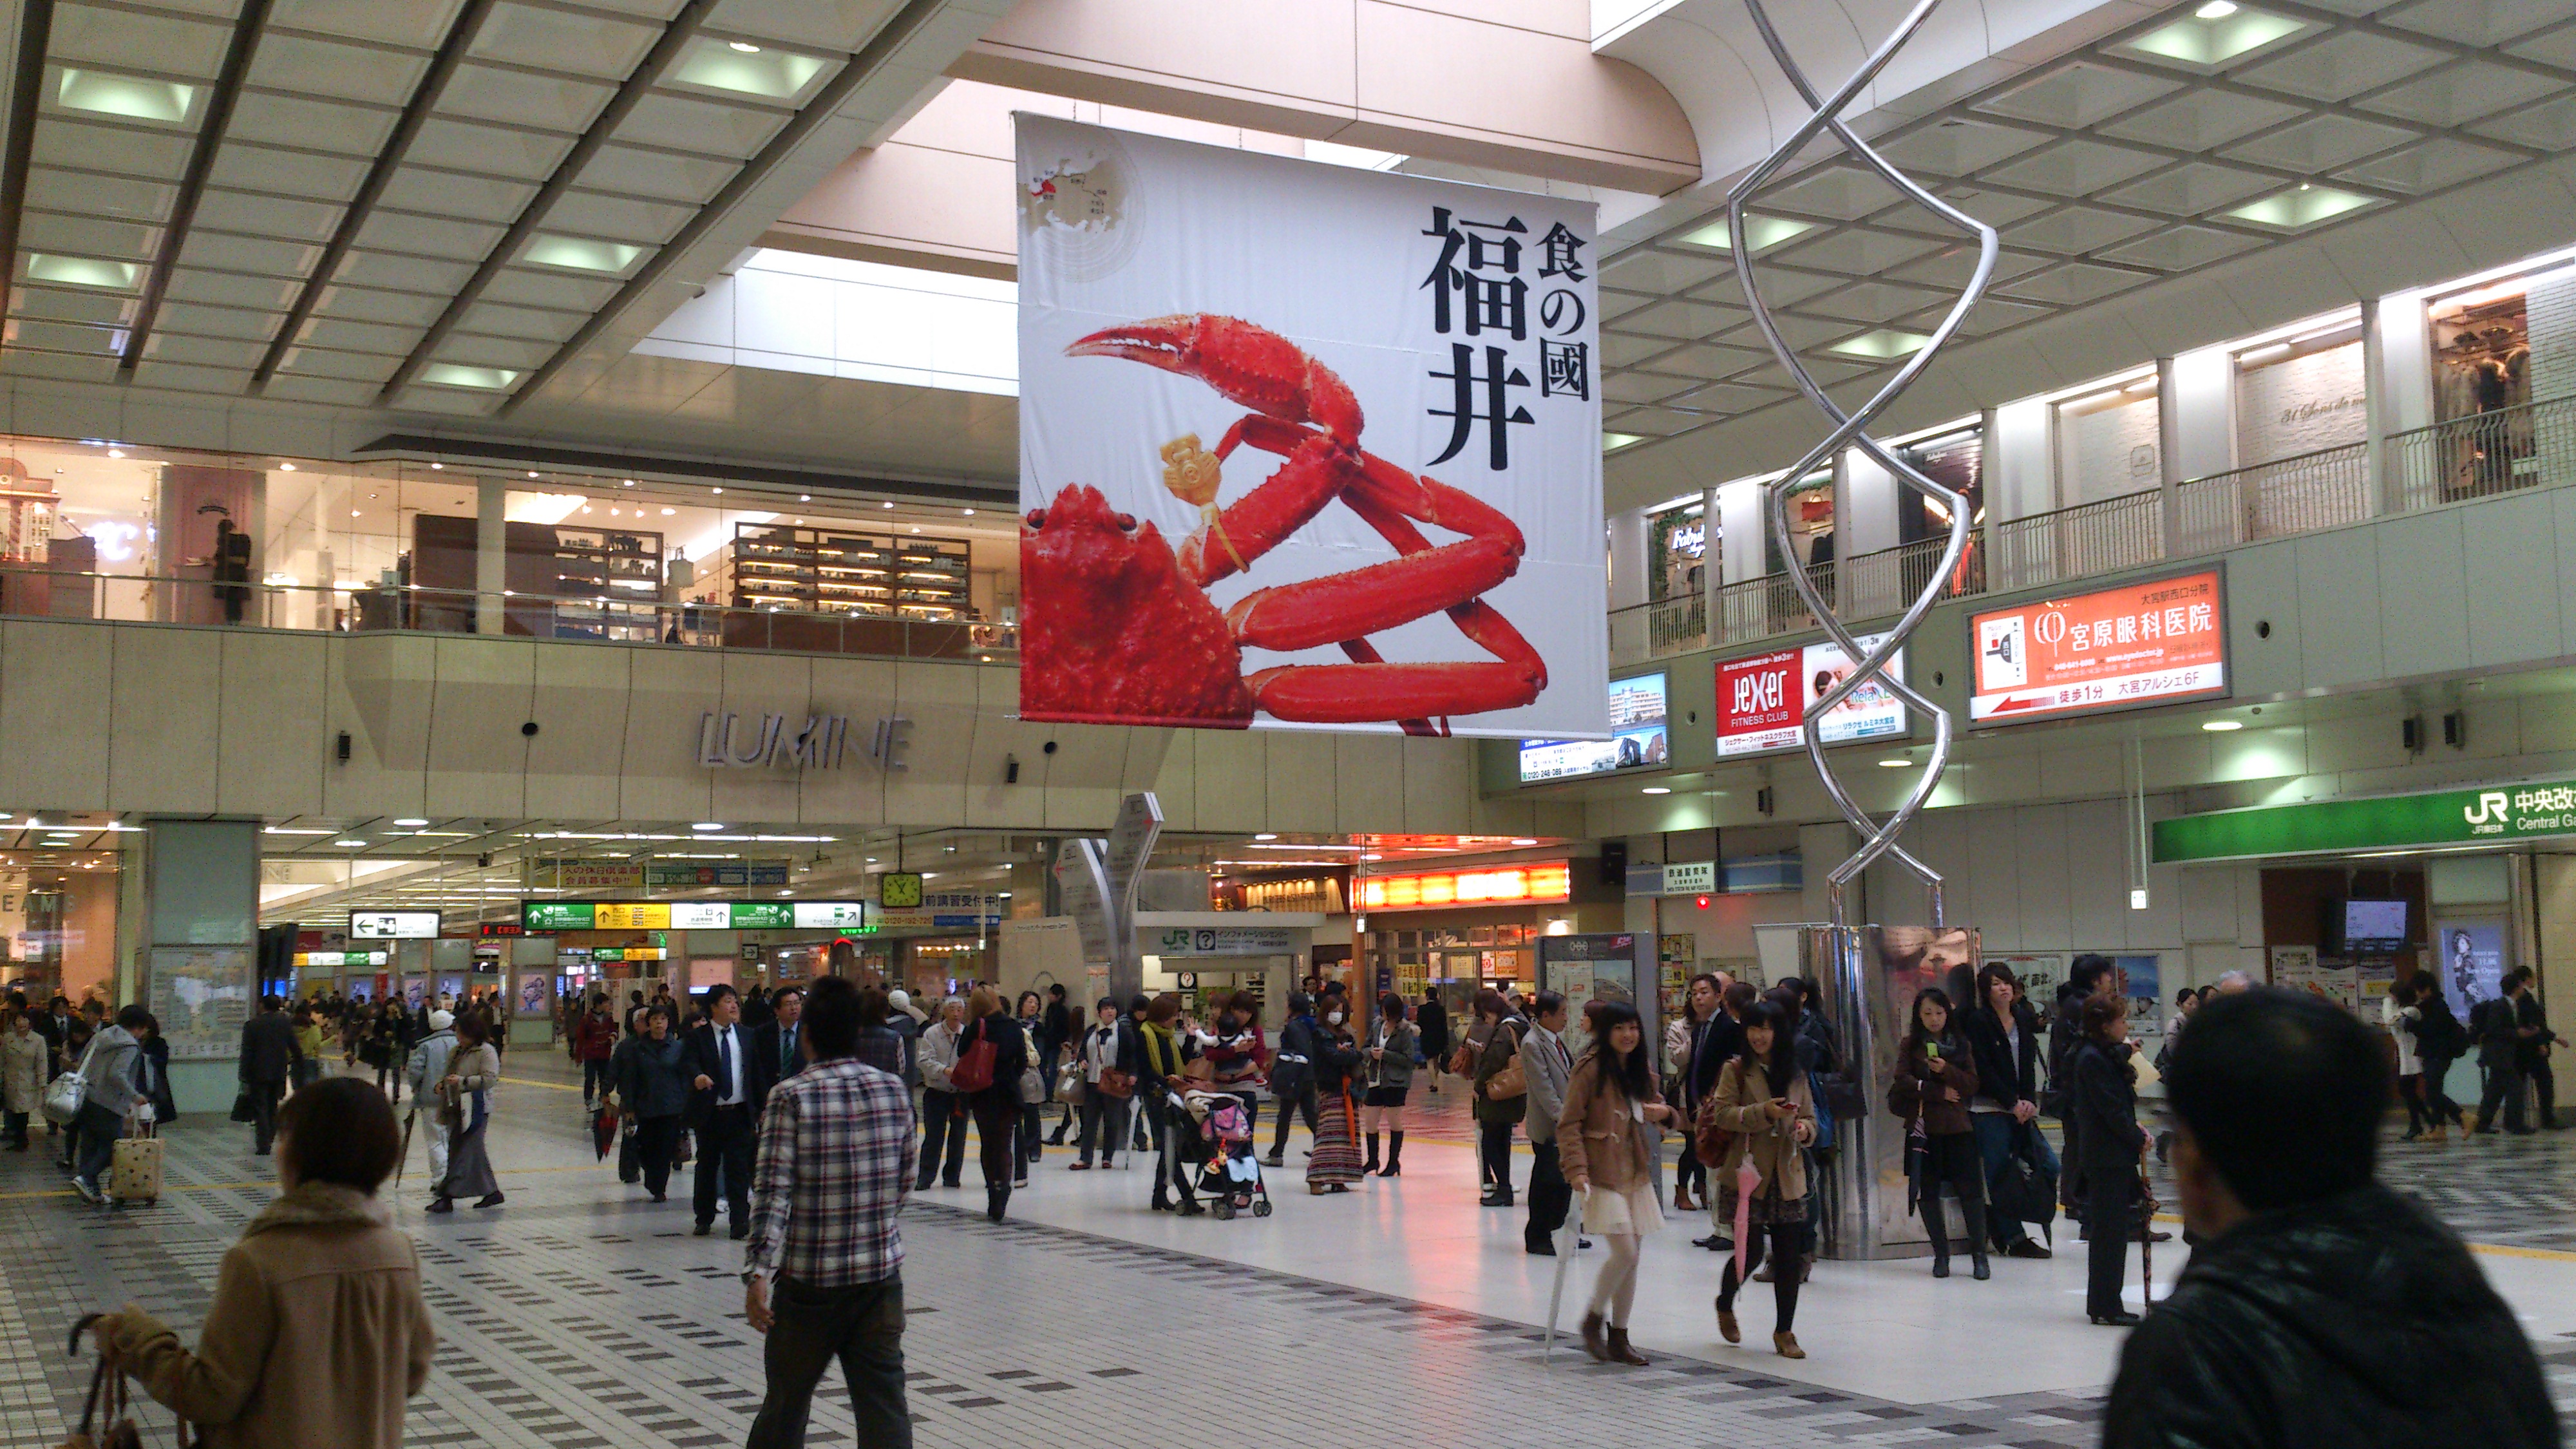 ＪＲ大宮駅に登場した福井県をＰＲする越前ガニの大型フラッグ広告